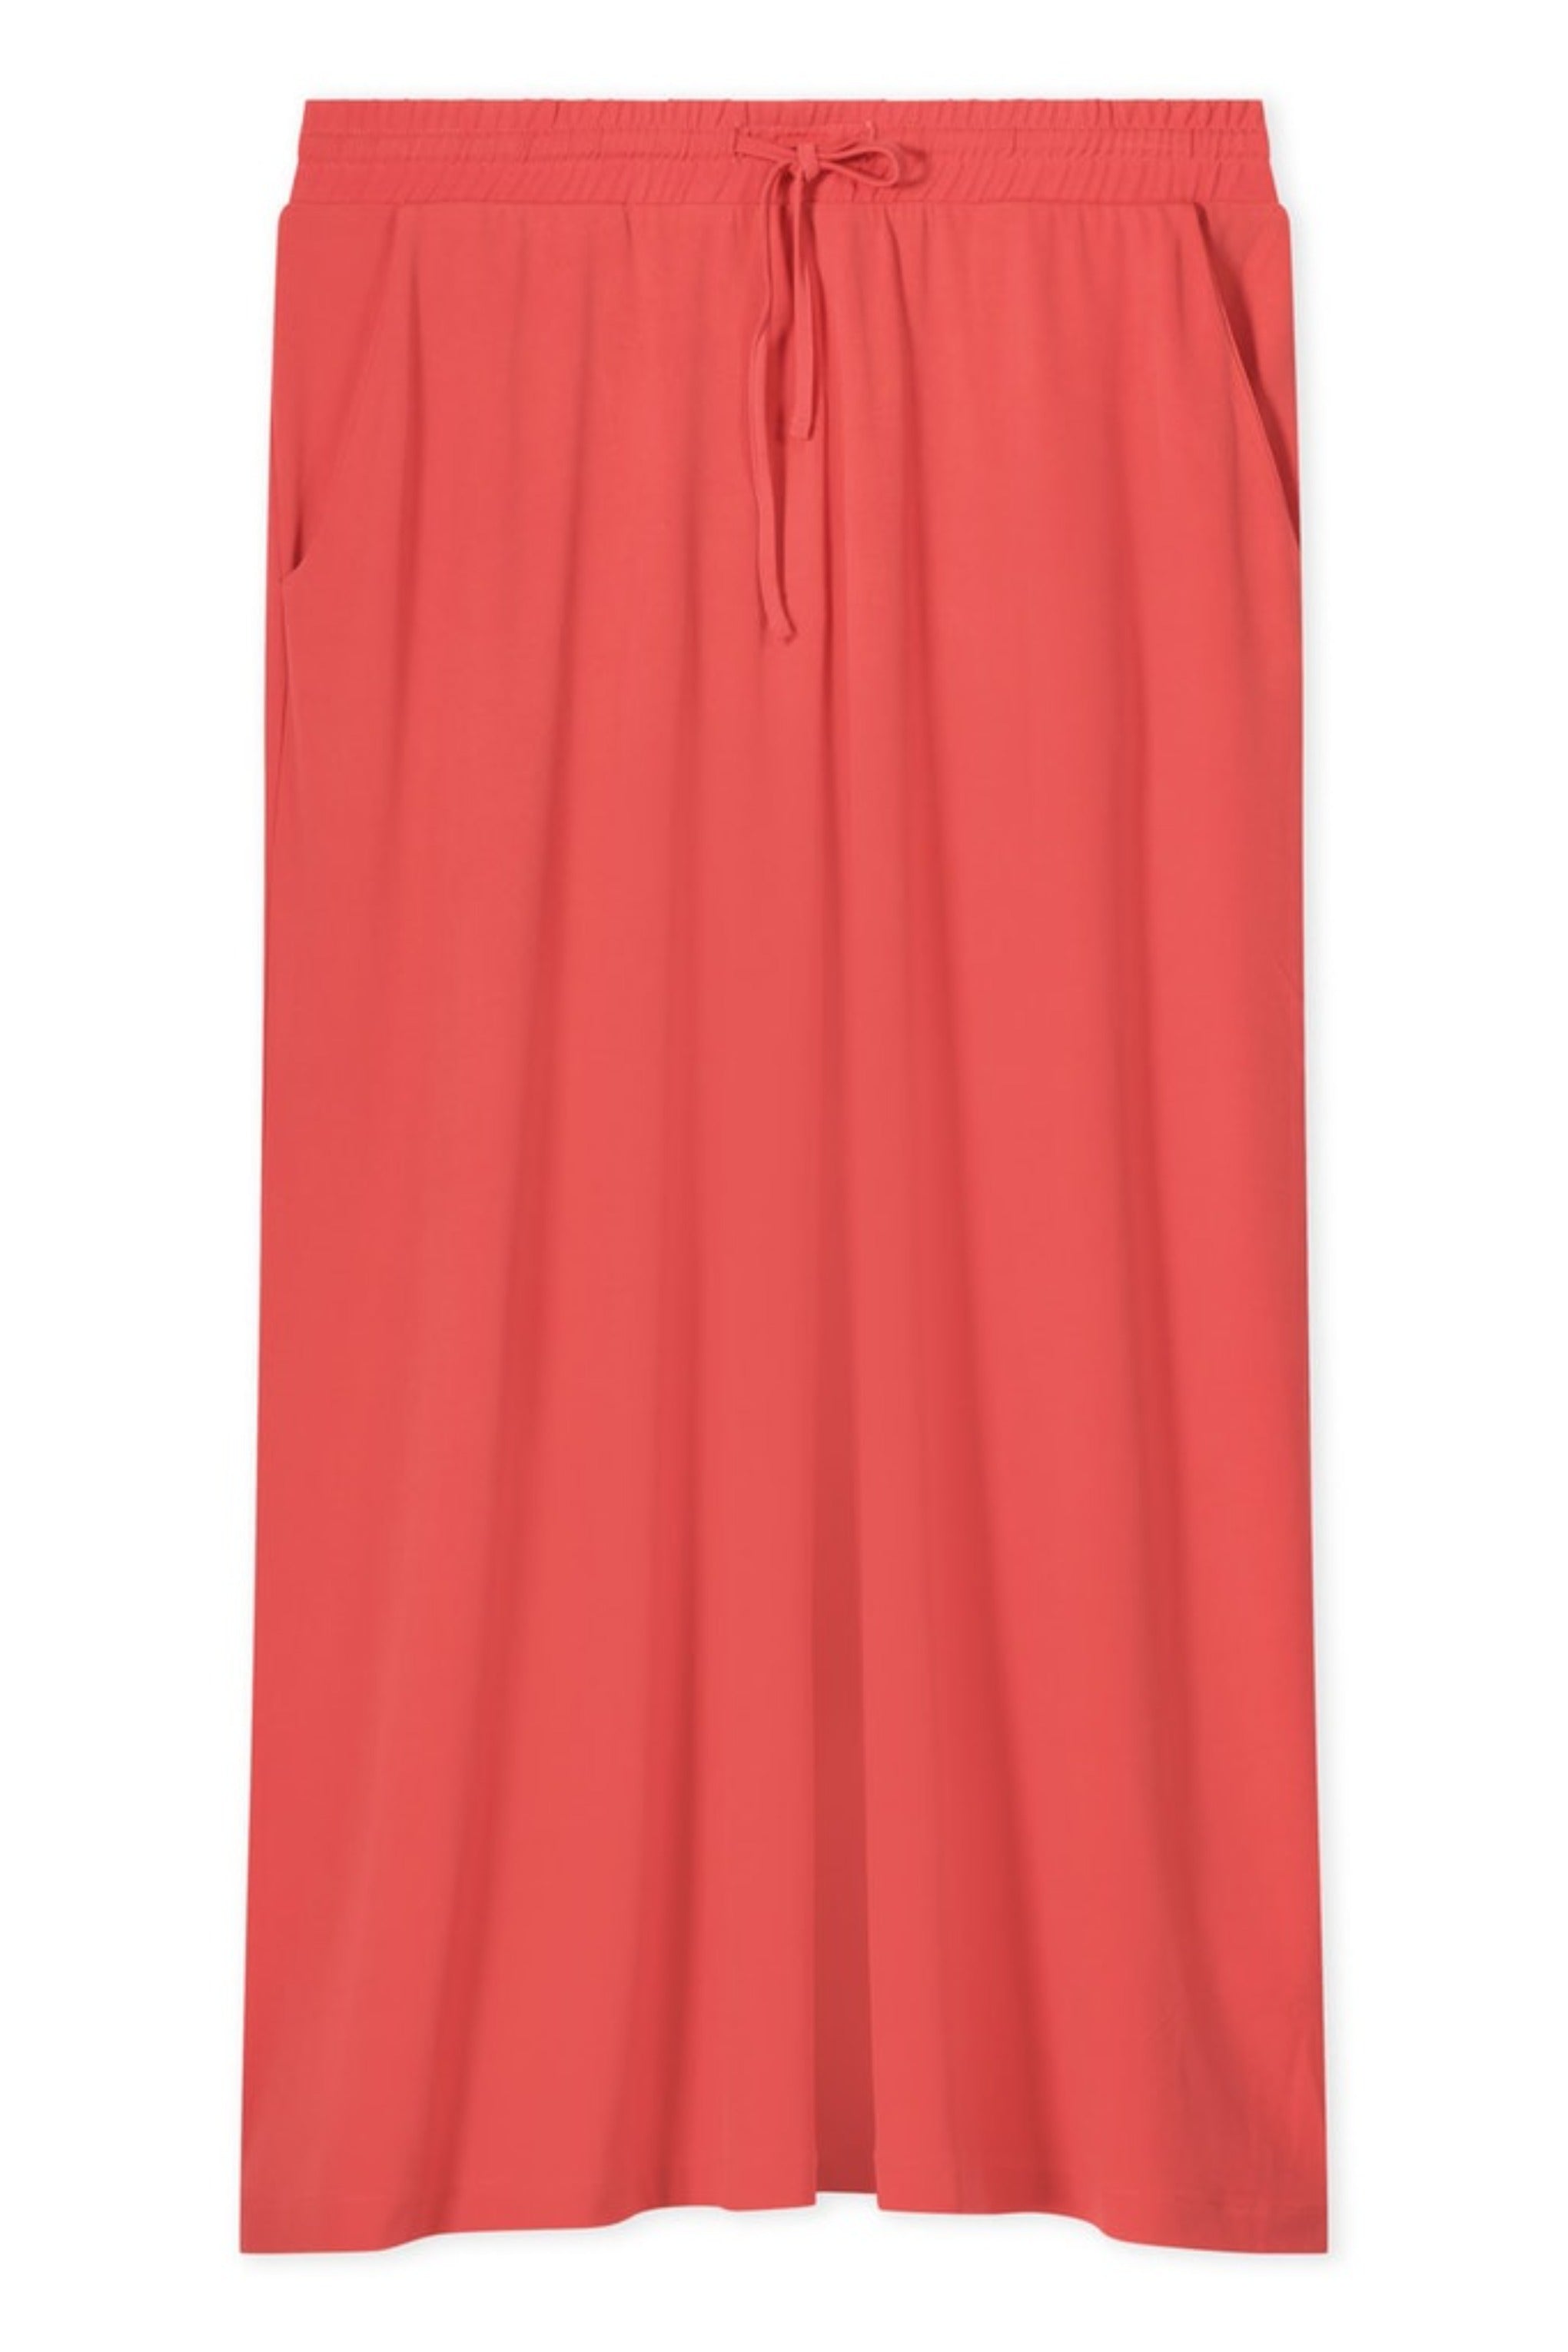 Vanora Long Jersey Skirt - Rose Red